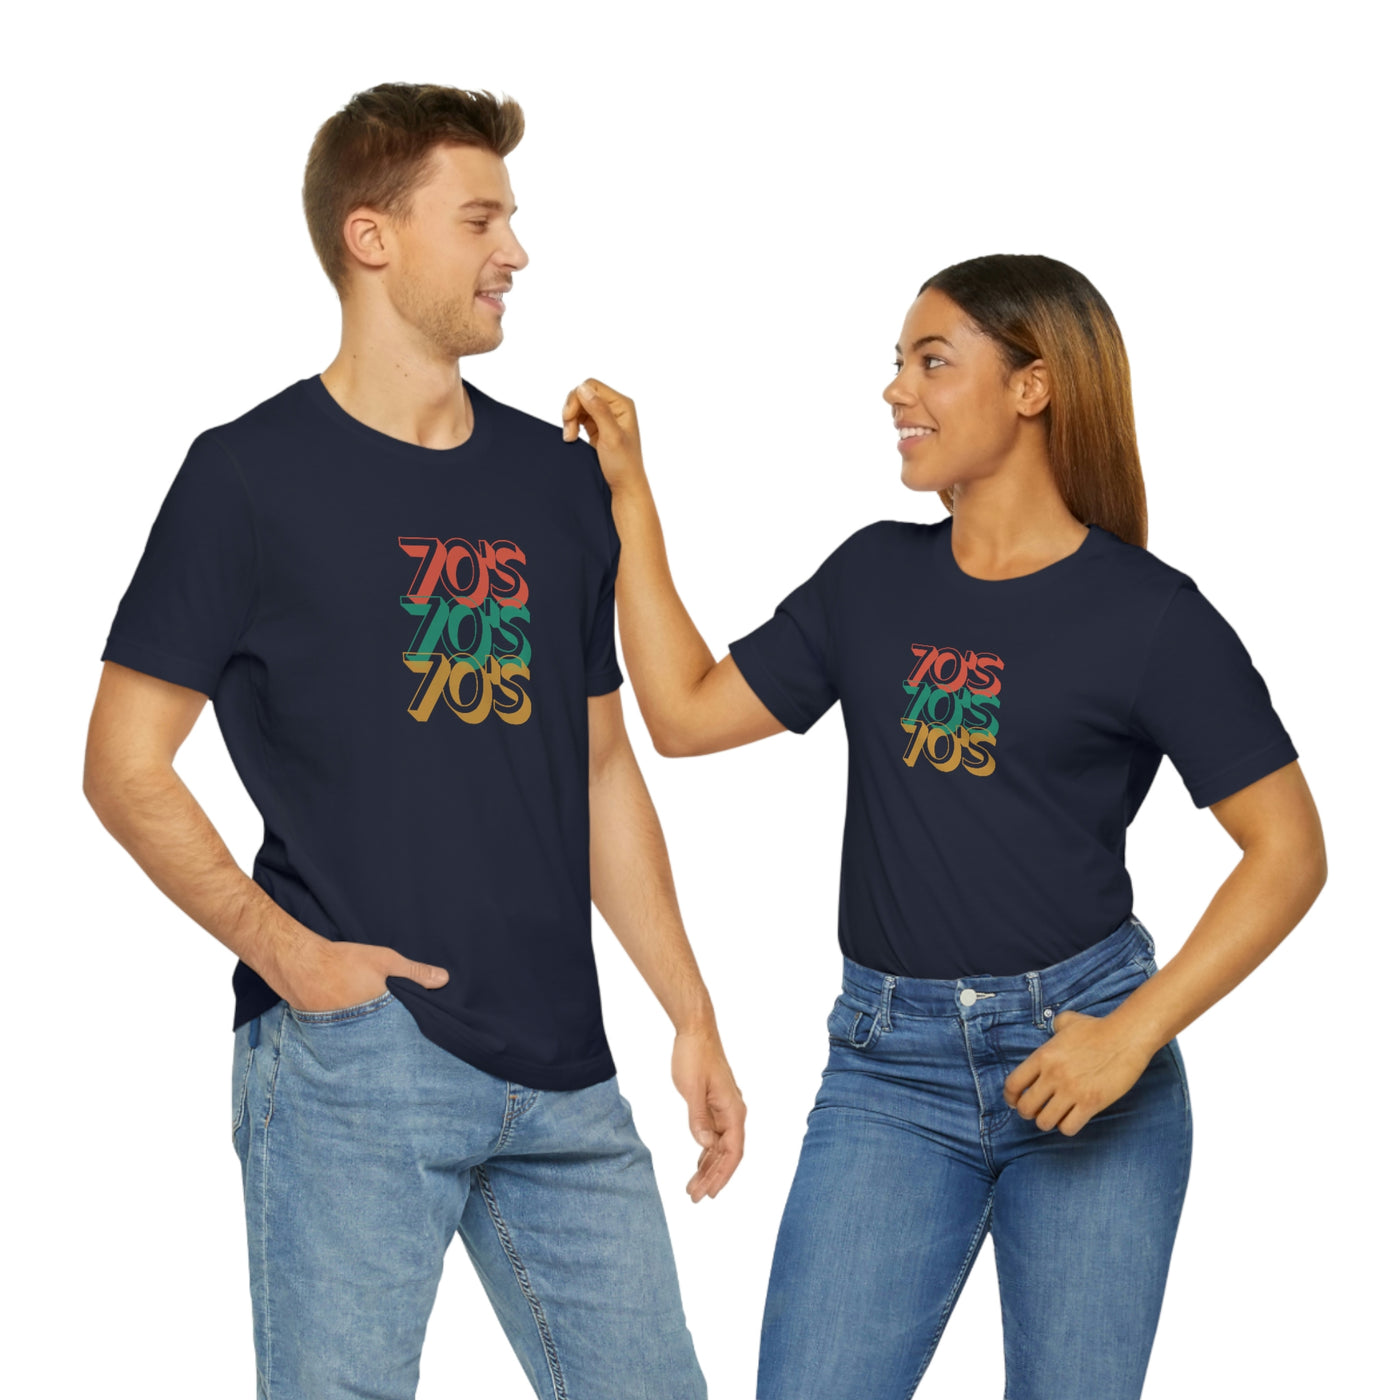 Version 4 of That 70's Music! T Shirt, retro Tee, Gift For Mom, Gift For Dad, Gift For Girlfriend, Gift For Boyfriend, 70's retro t shirt